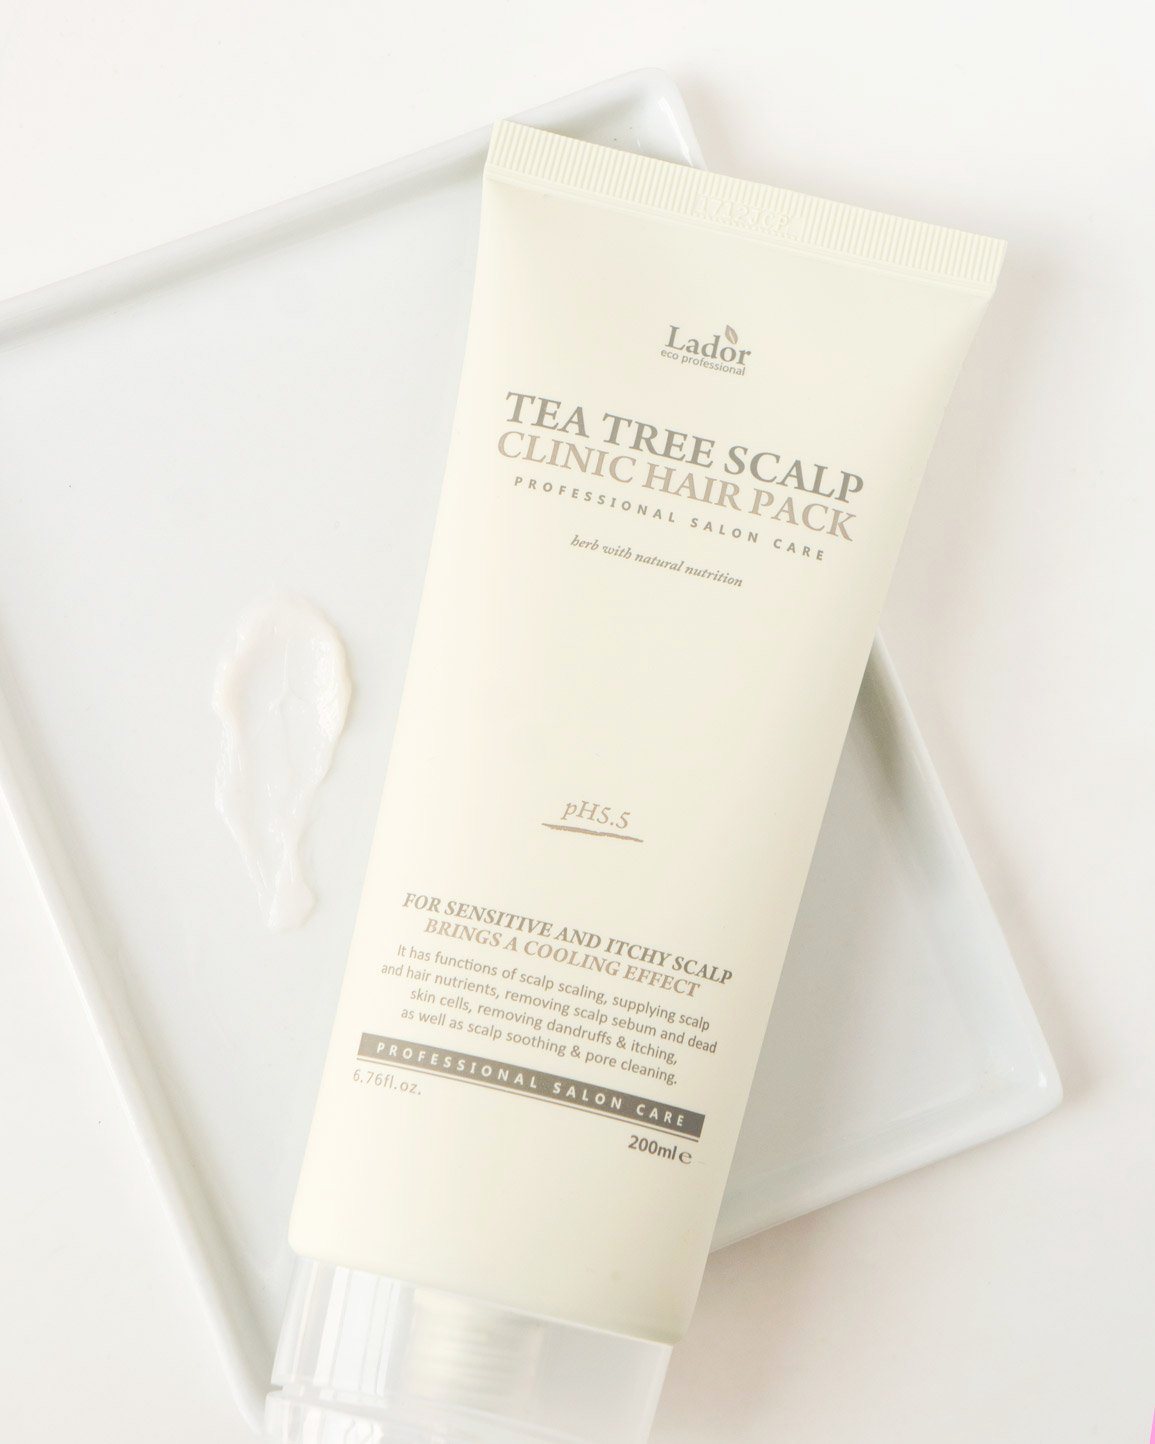 Tea Tree Scalp Clinic Hair Pack, clean beauty